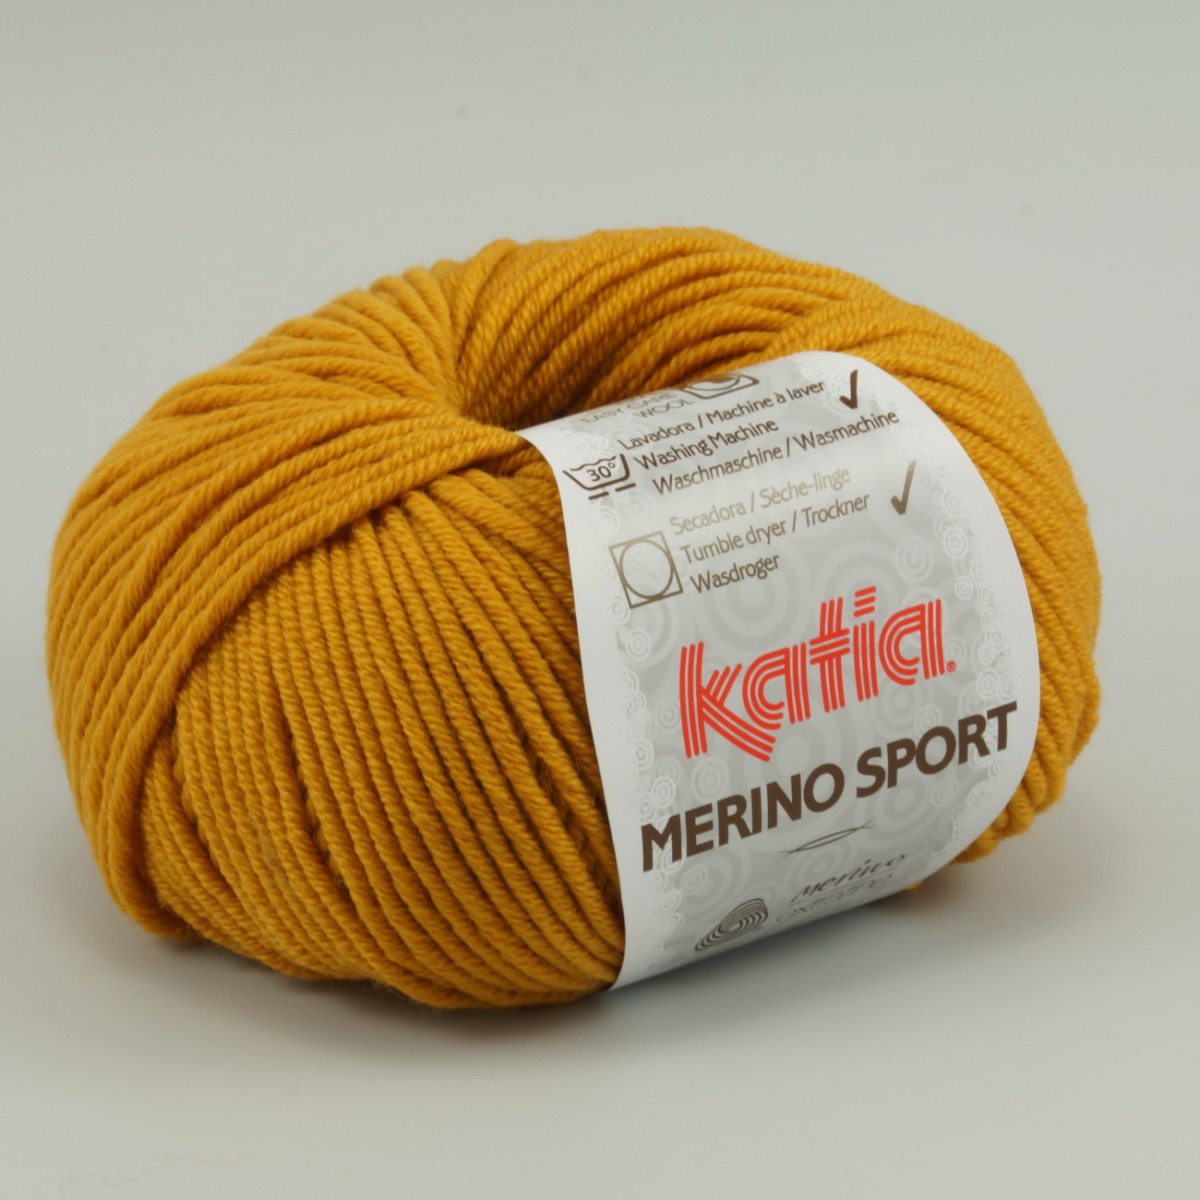 - 50 g // ca 80 m Wolle 12 AZULADO MERINO SPORT von Katia